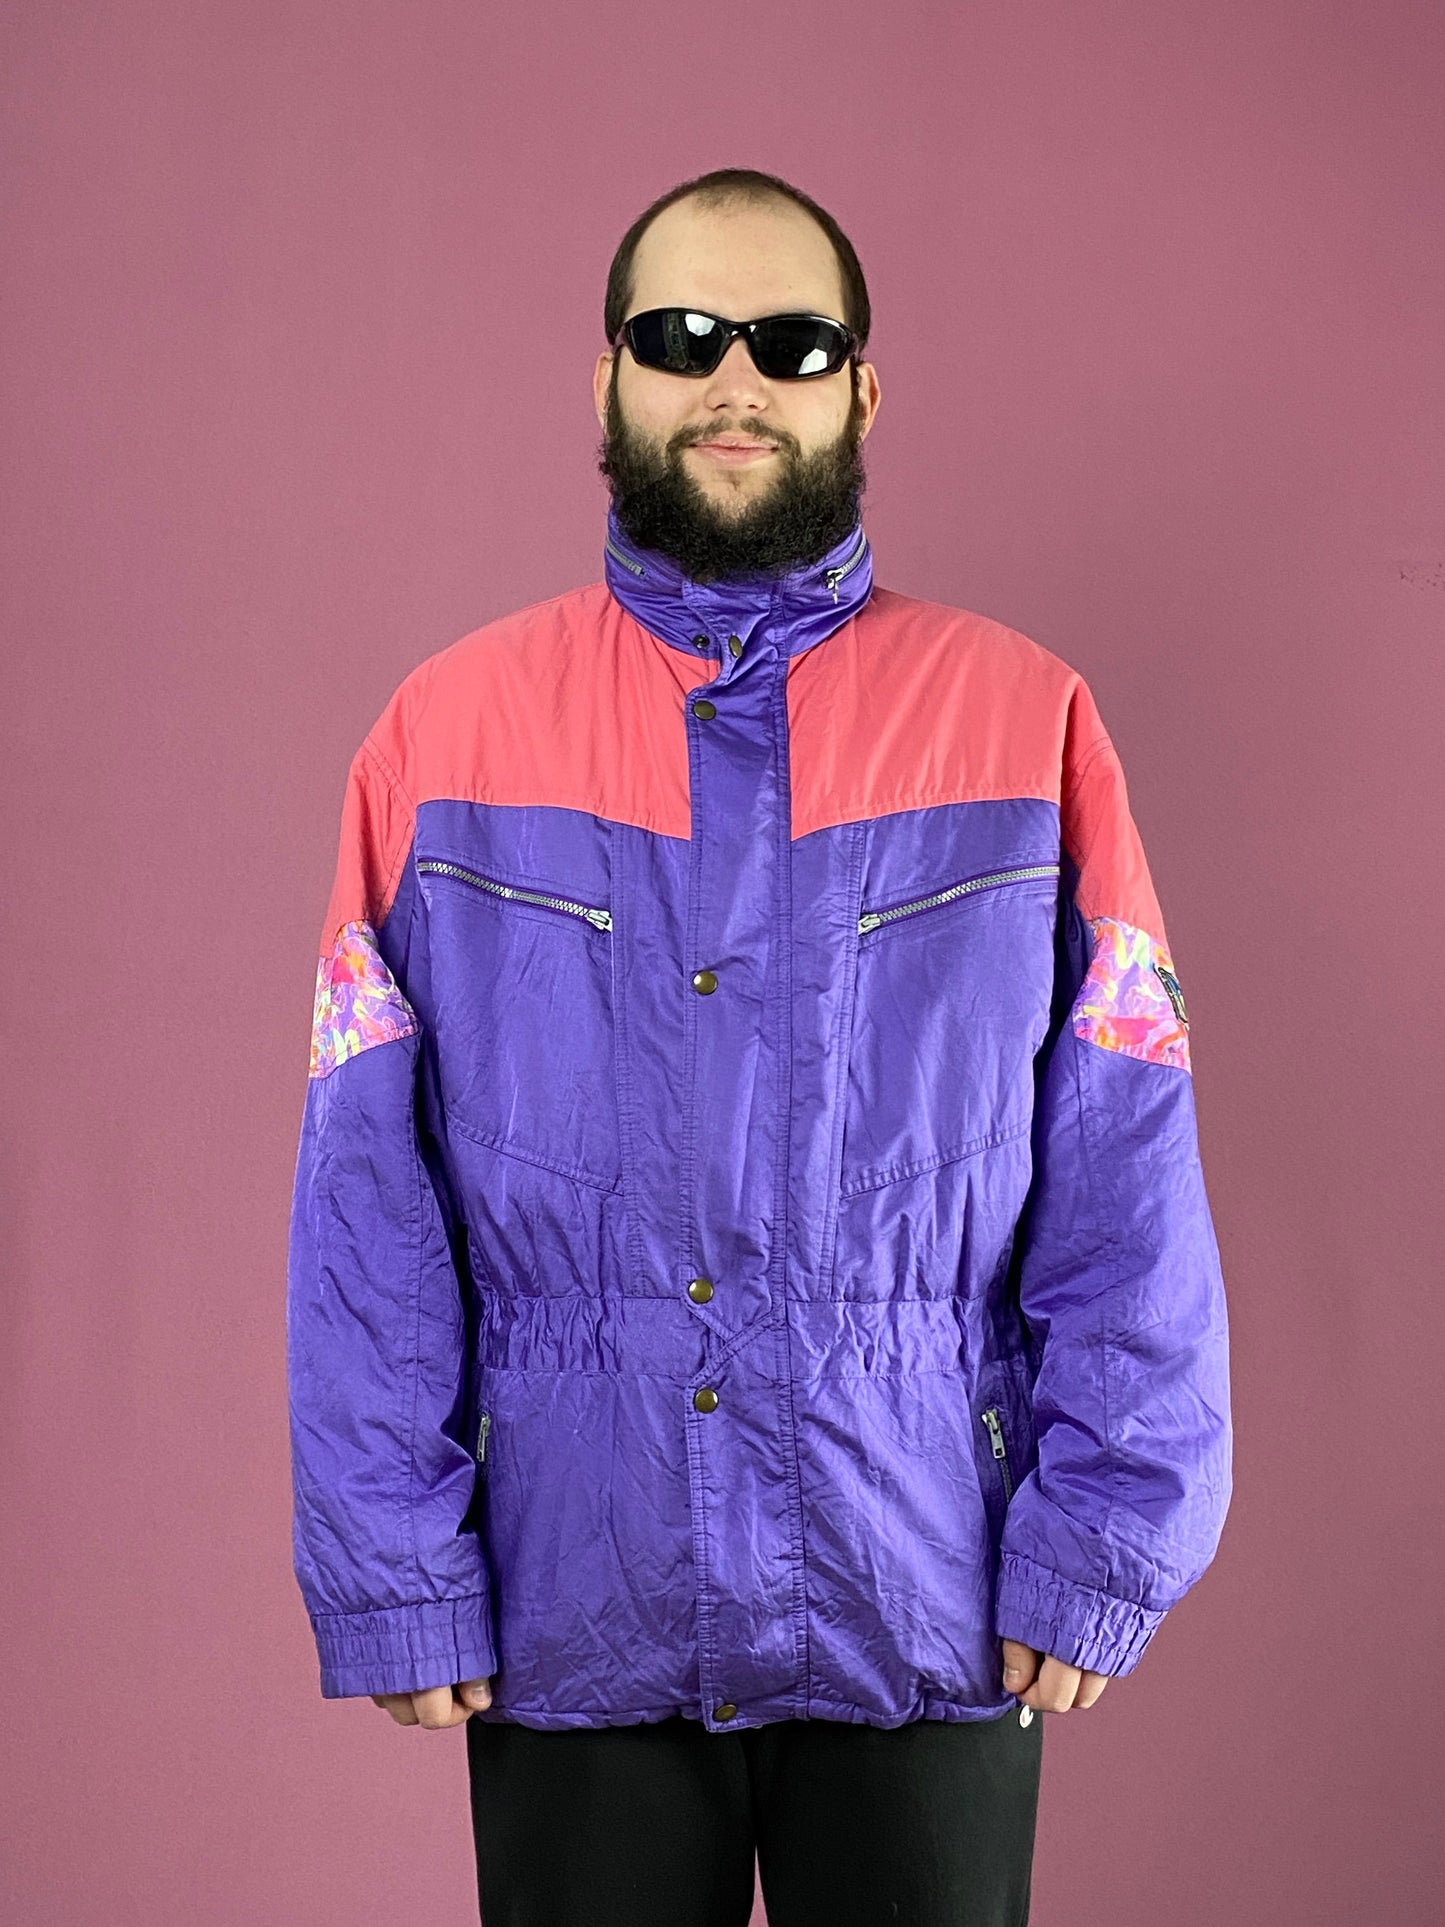 90s Asics Vintage Men's Ski Jacket - Medium Purple Nylon